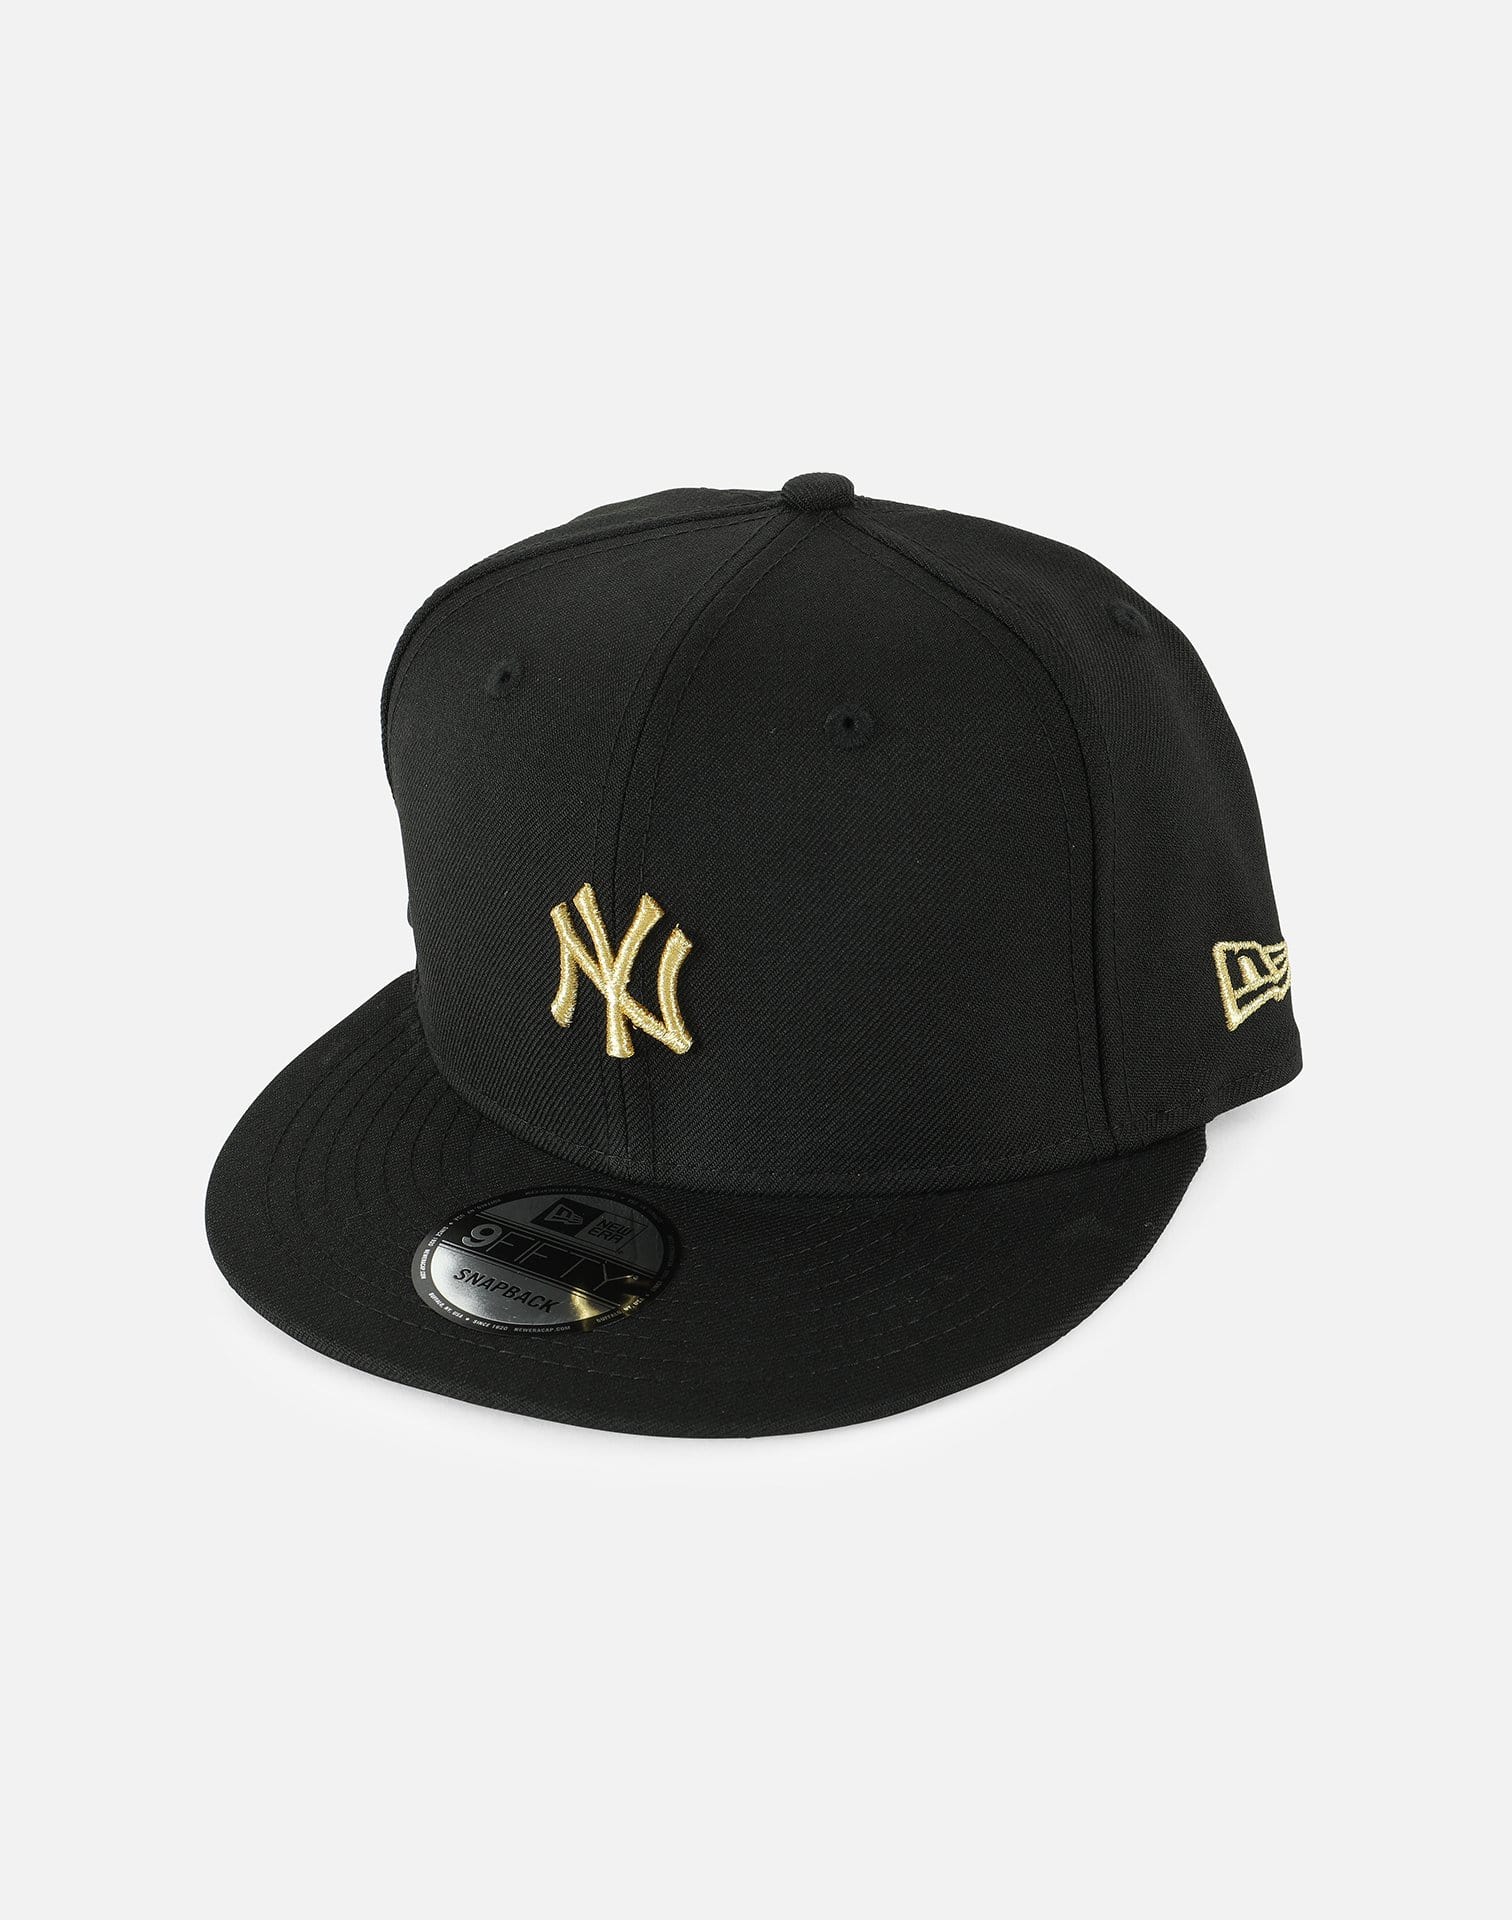 New Era MLB New York Yankees Gold badge Snapback Hat